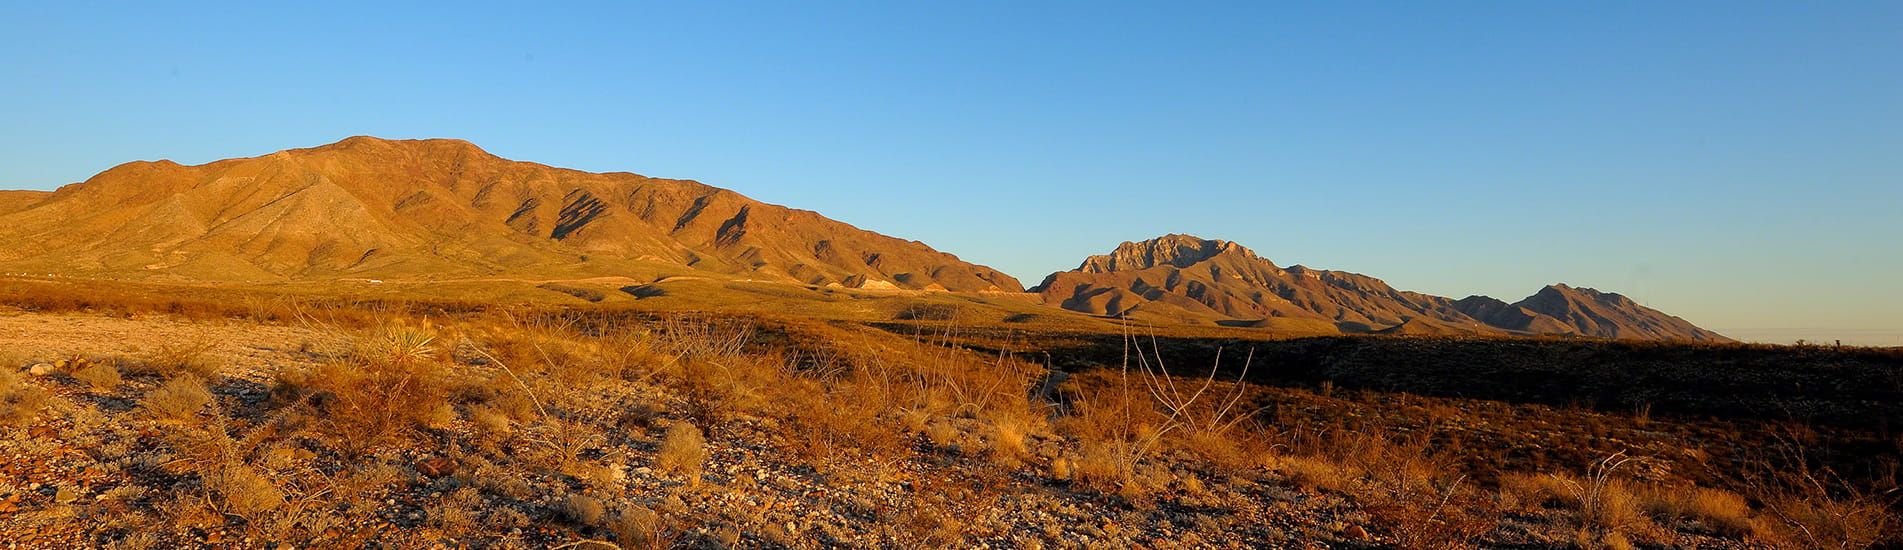 Dry desert vegetation in front of a mountain range and blue sky.